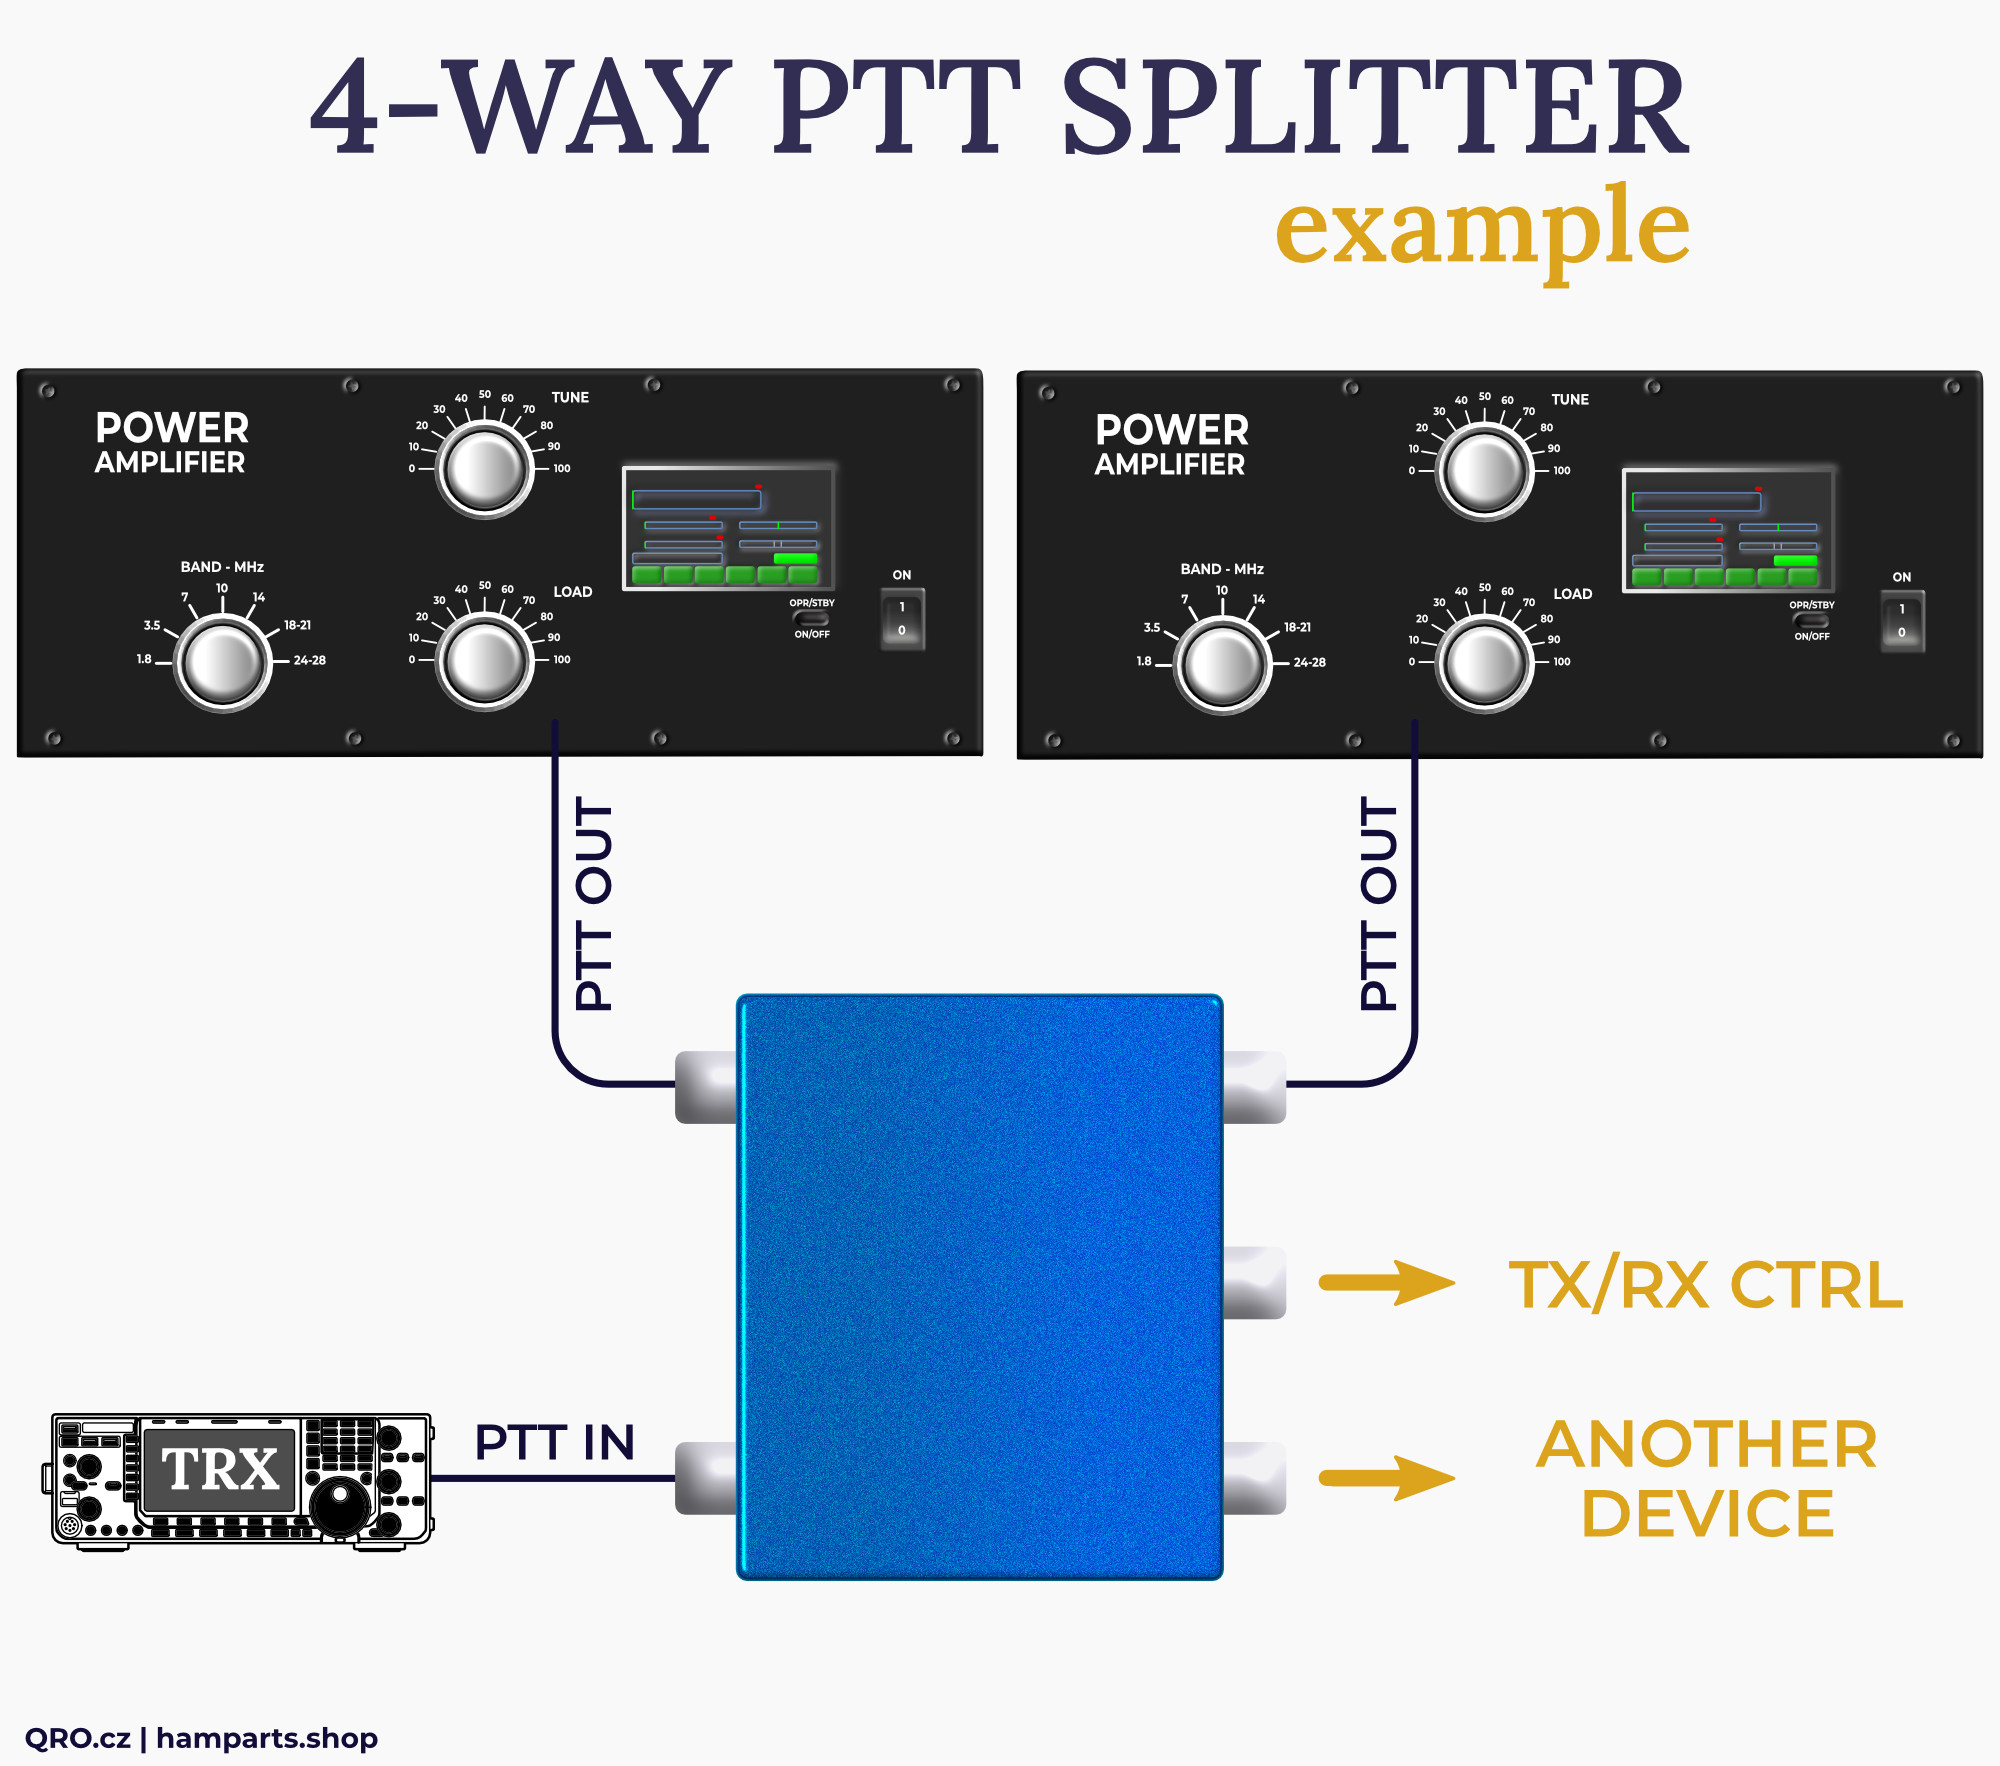 4-way ptt splitter principle by qro.cz hamparts.shop